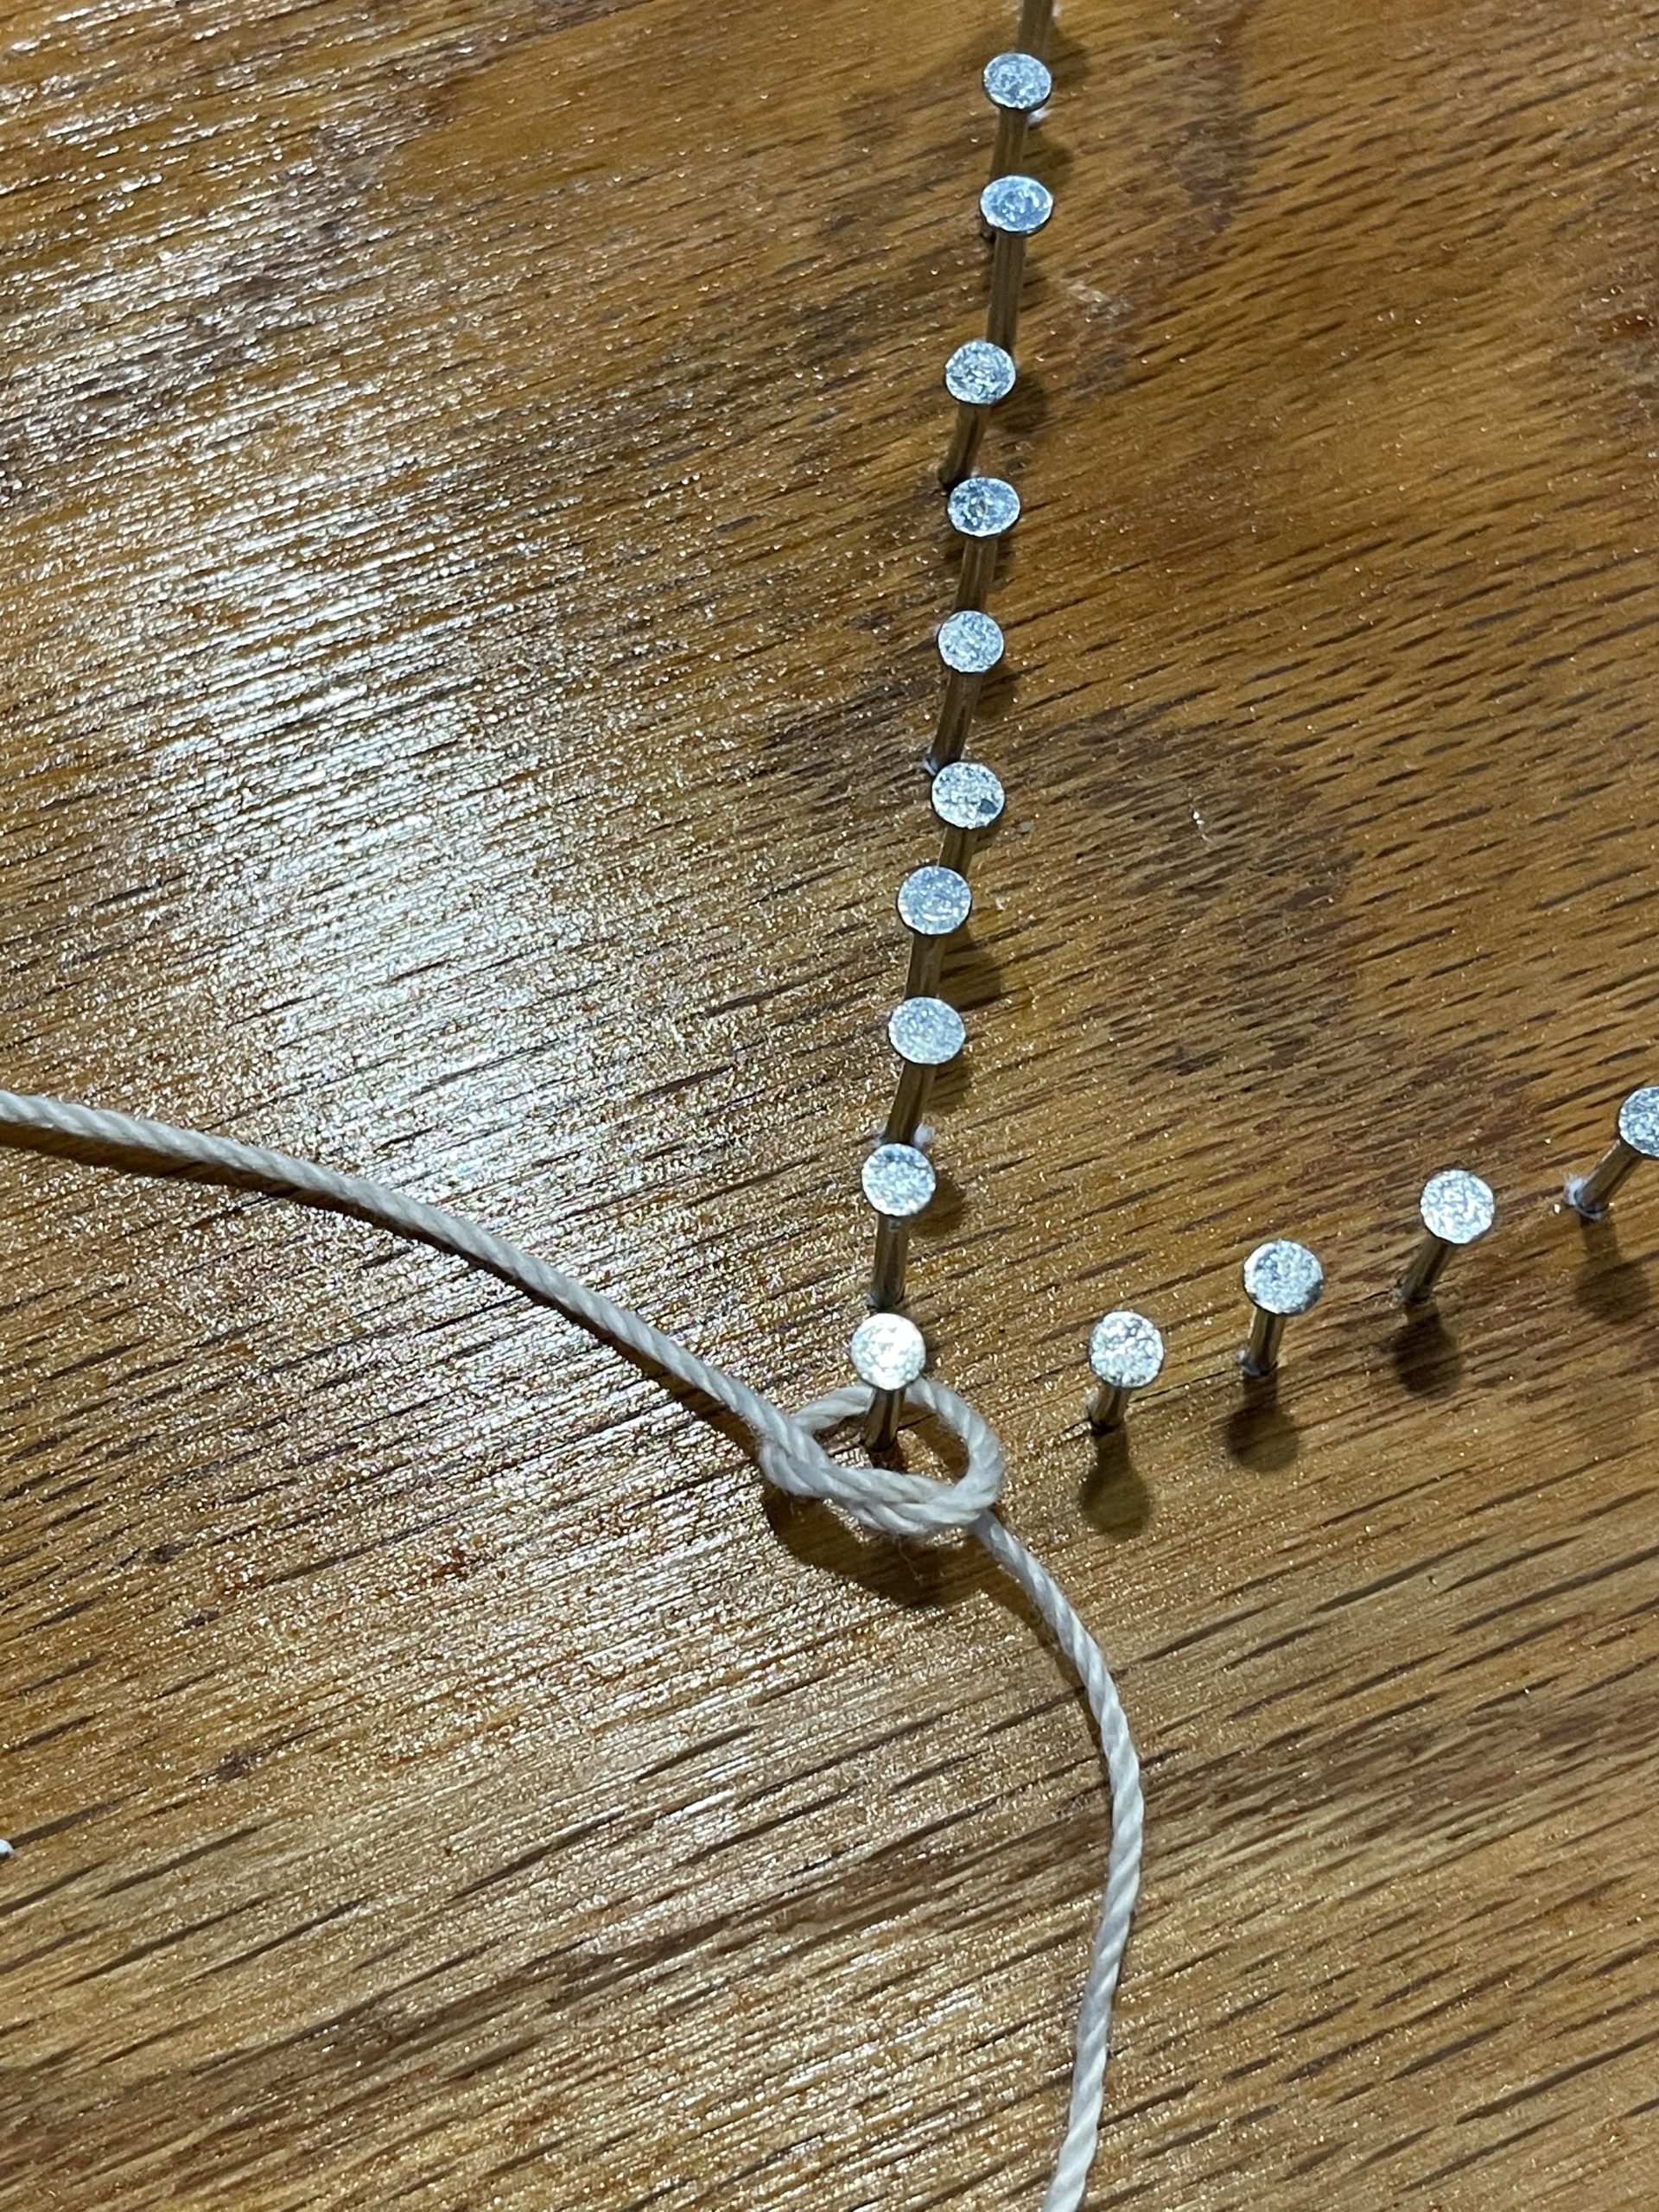 How to begin string art